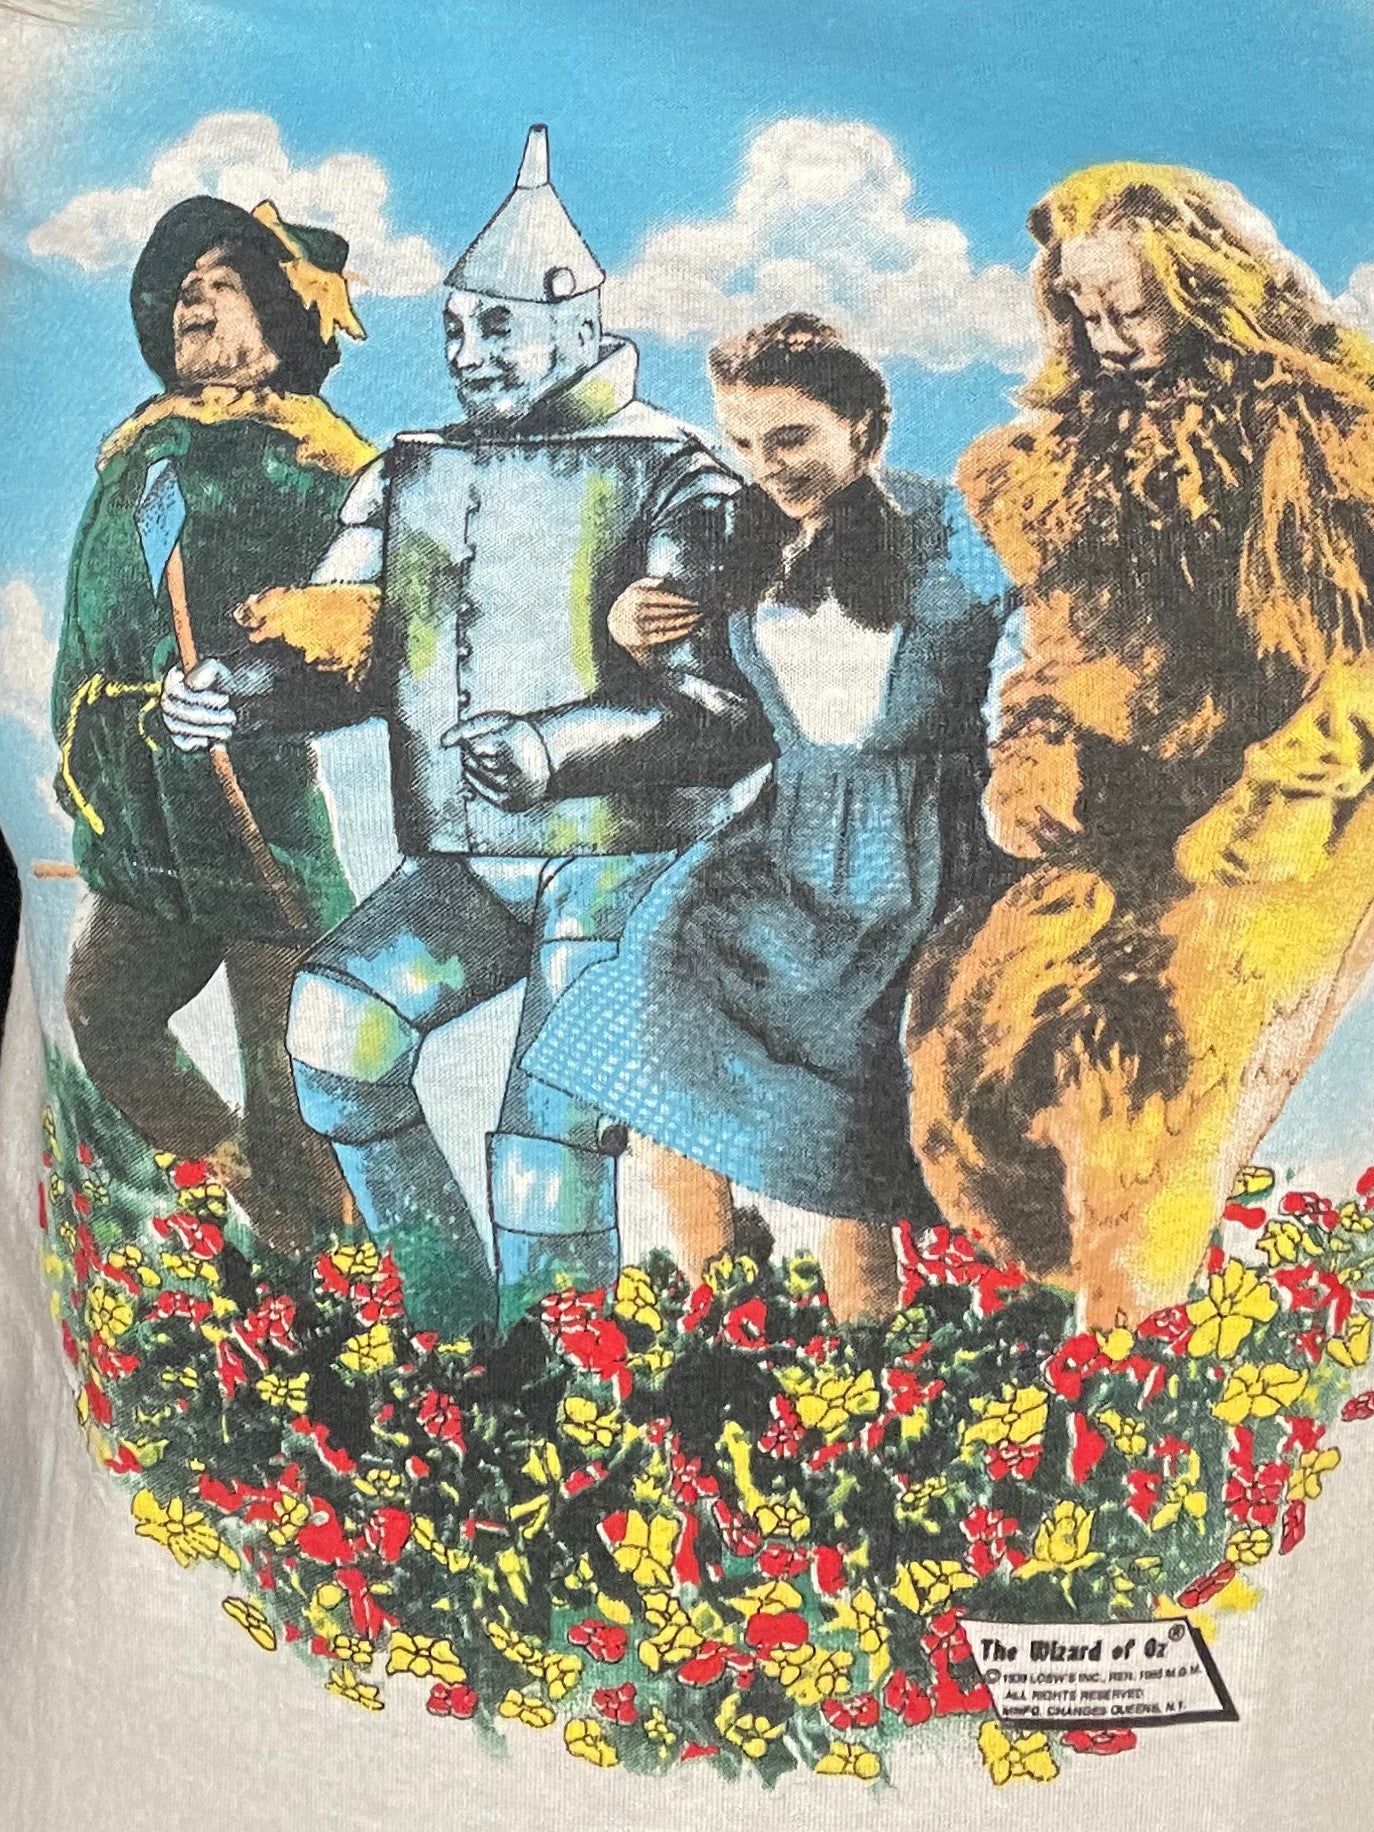 Vintage 90s Wizard of Oz T-shirt - Spark Pretty